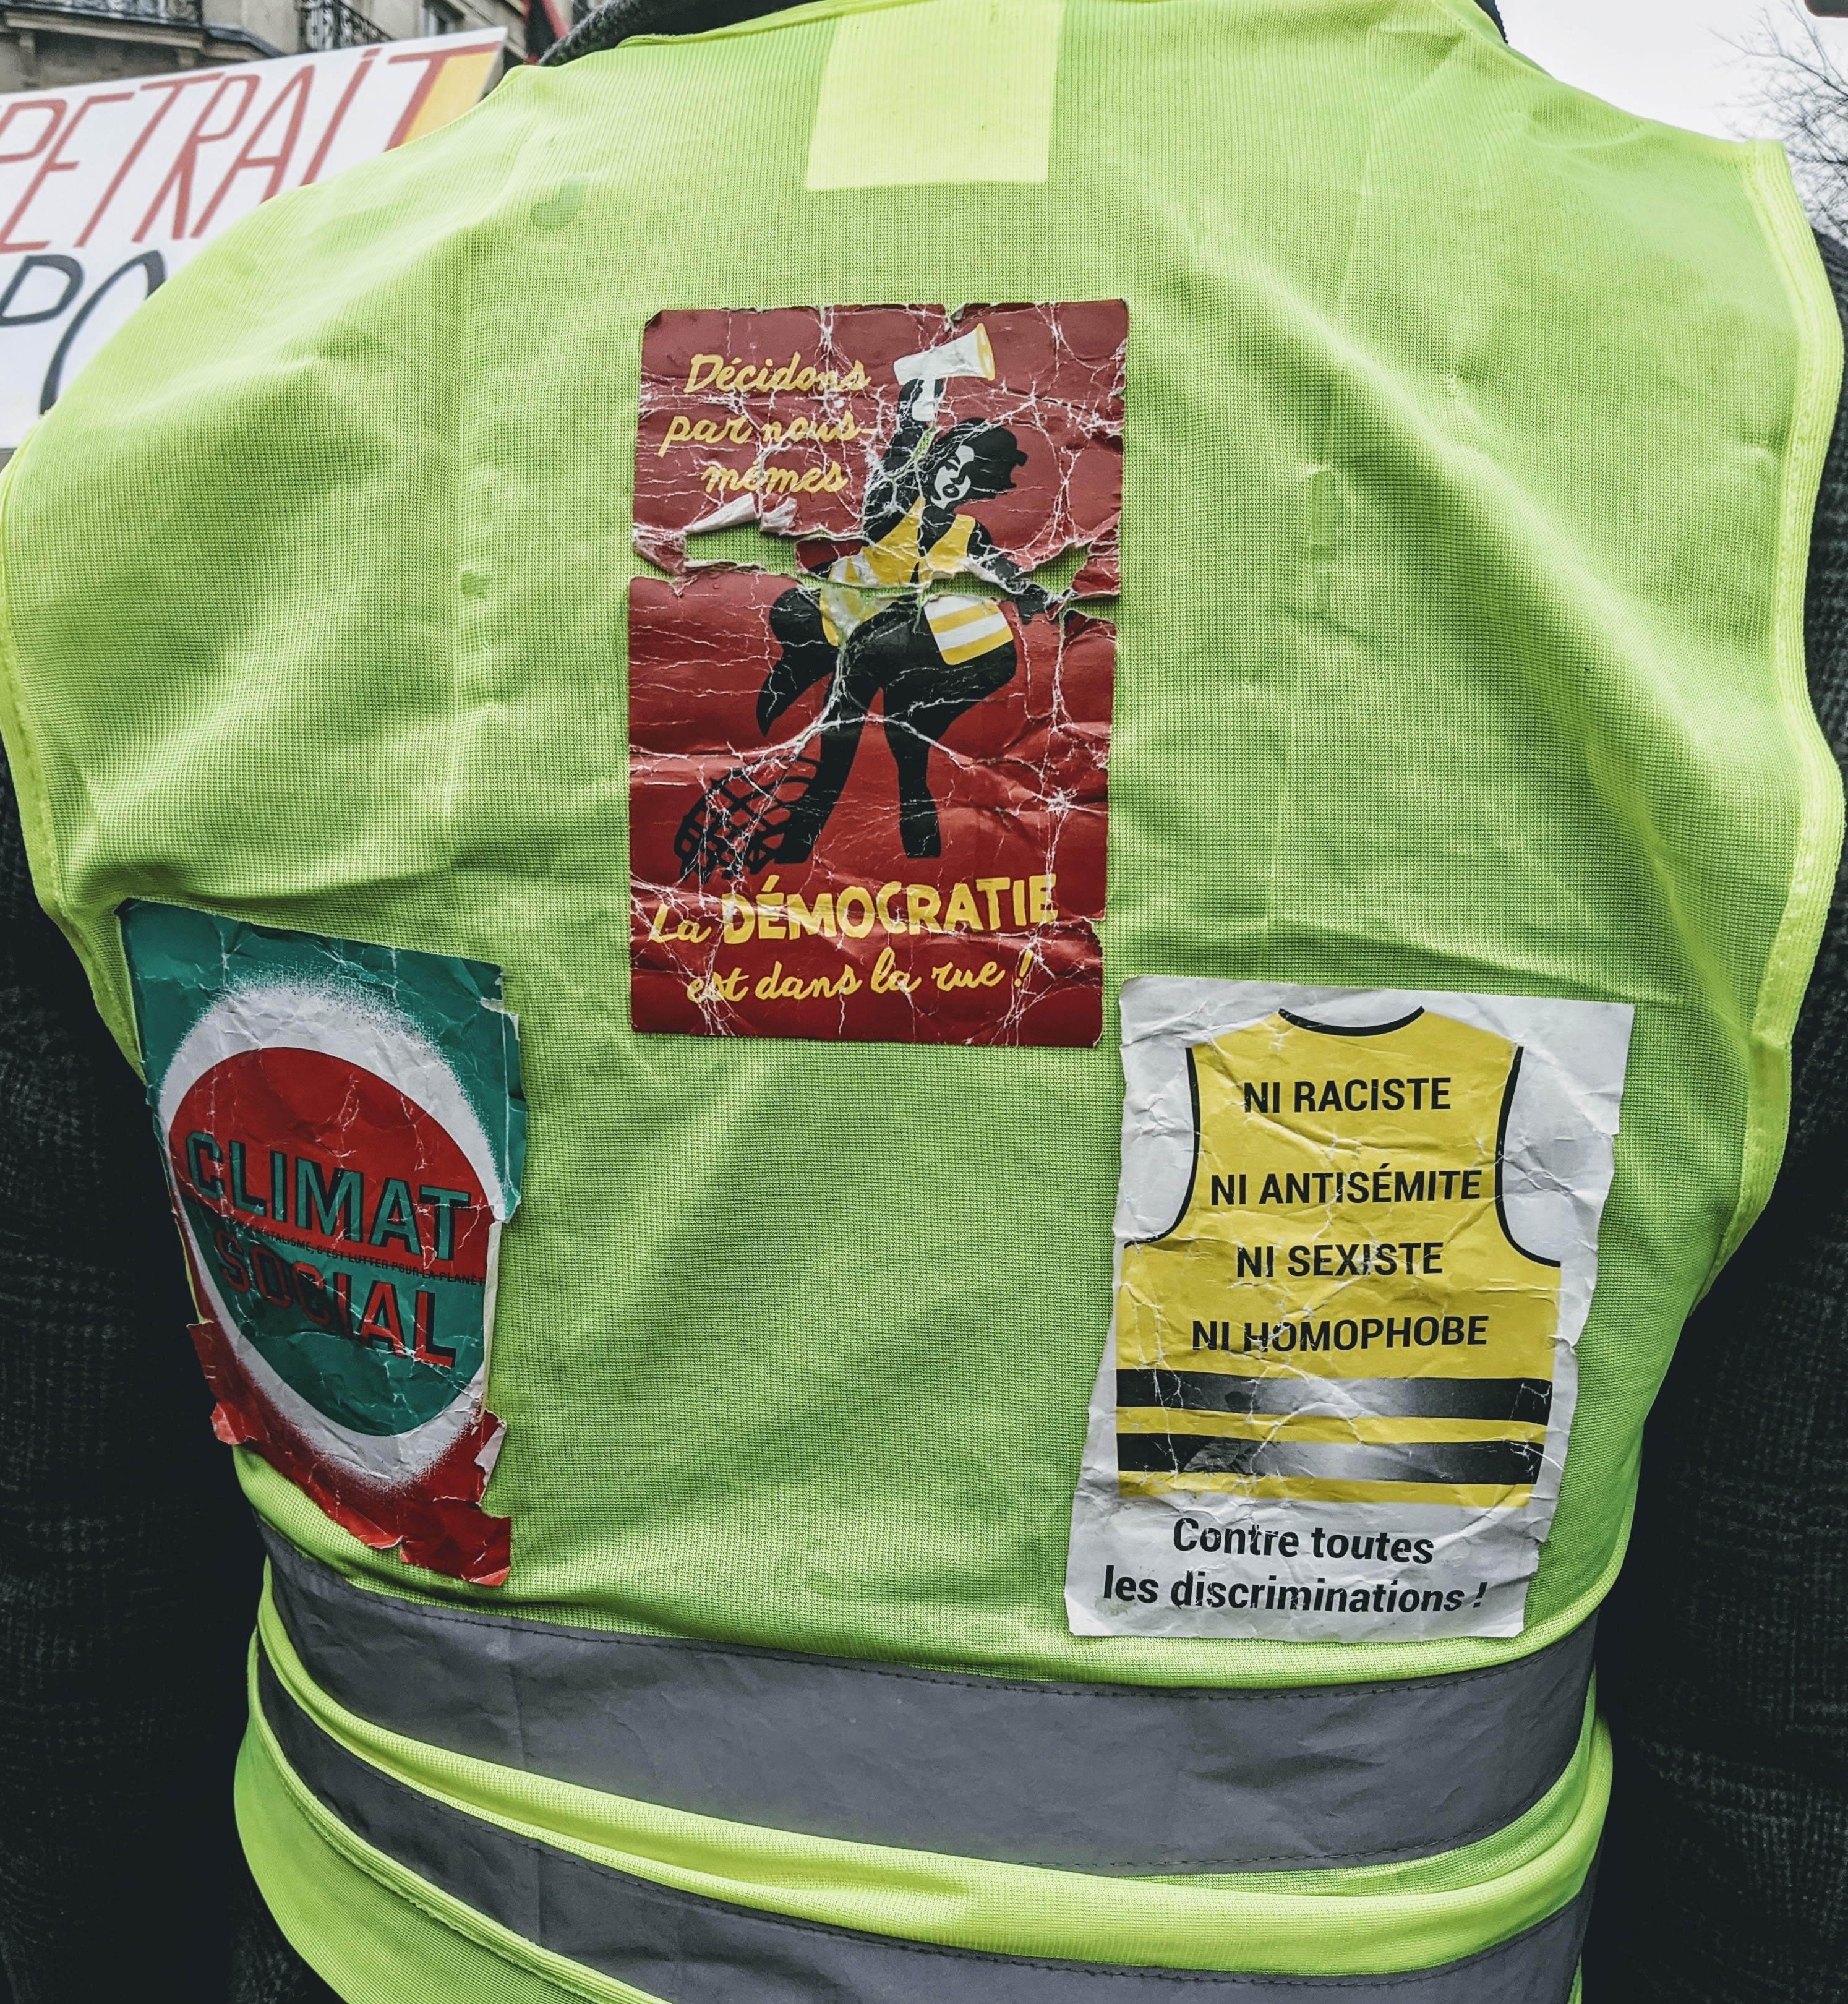 A striking worker's vest